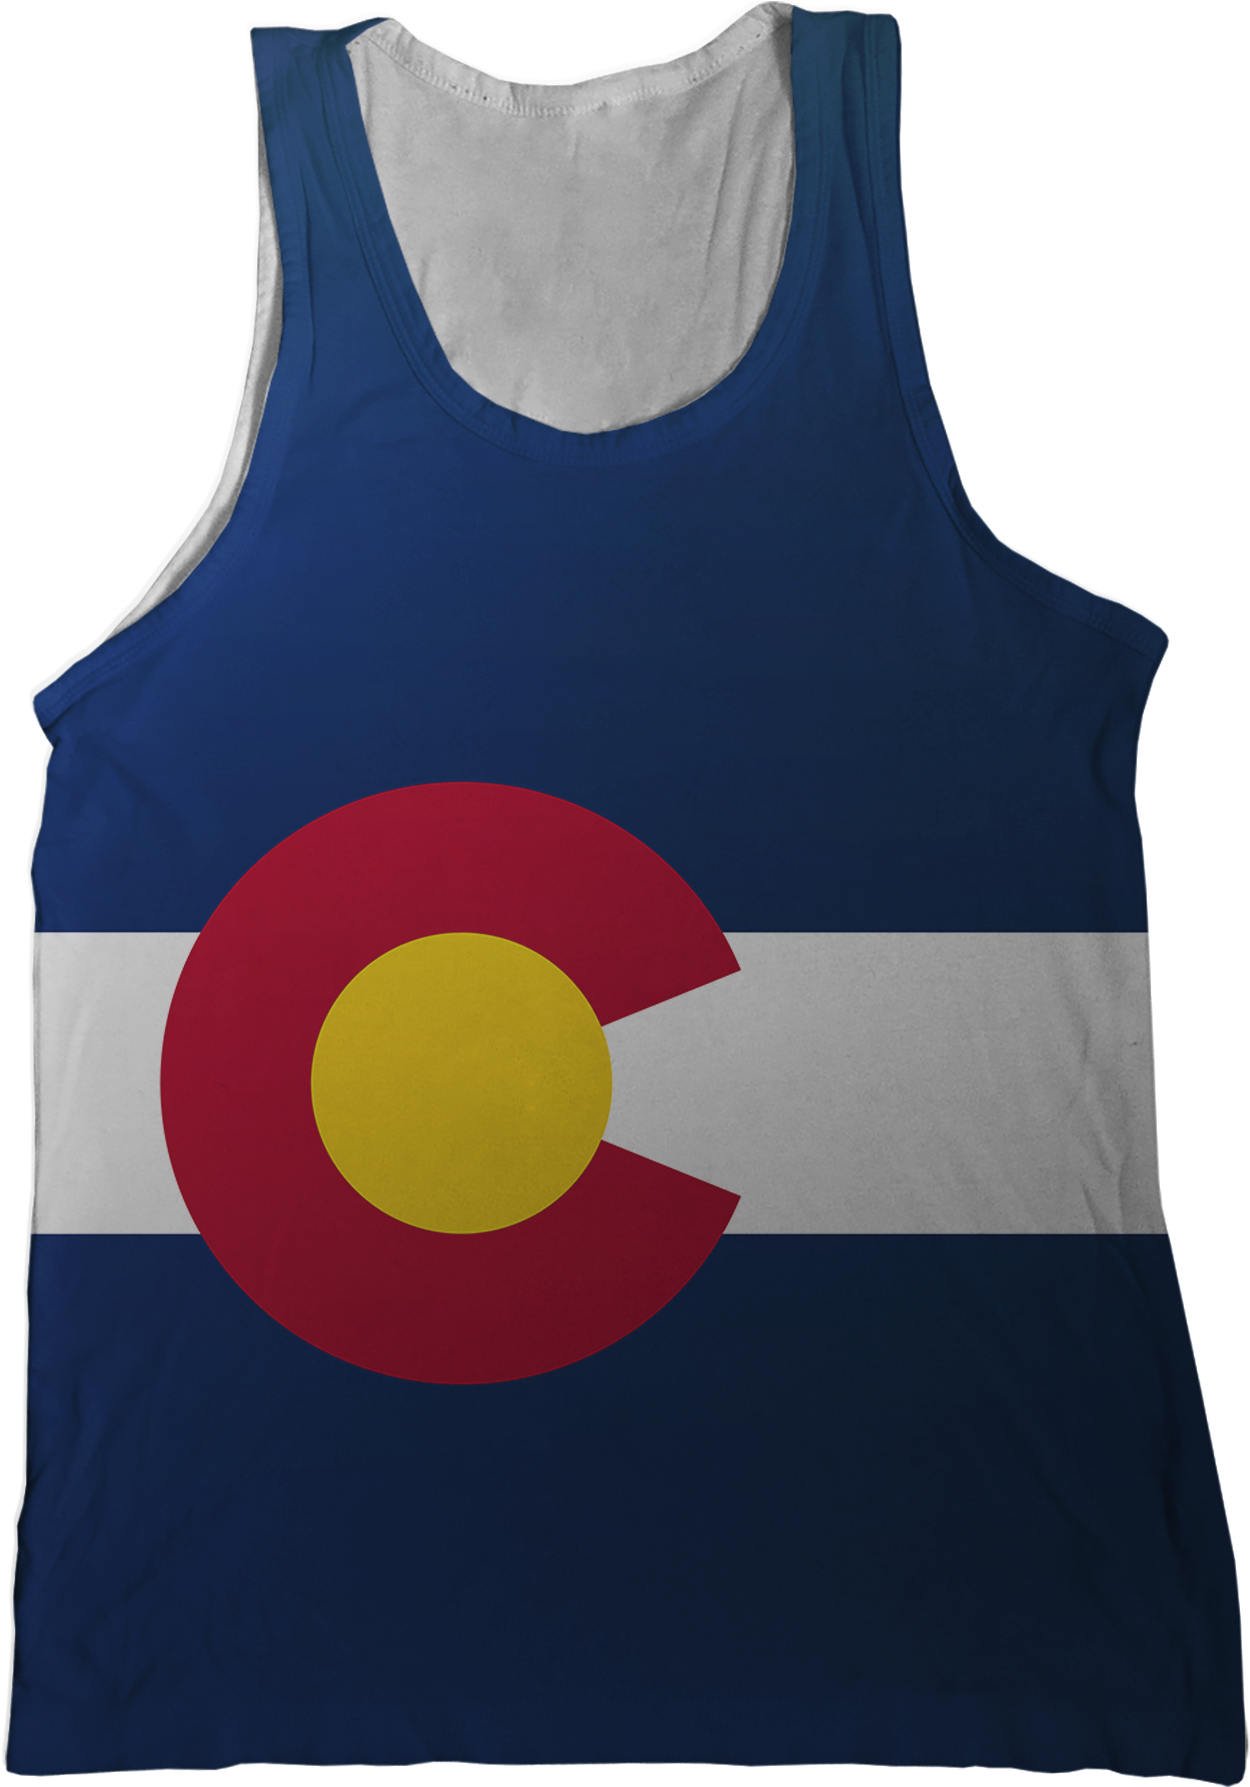 Colorado State Flag Tank Top - Active Tank (1296x1786)